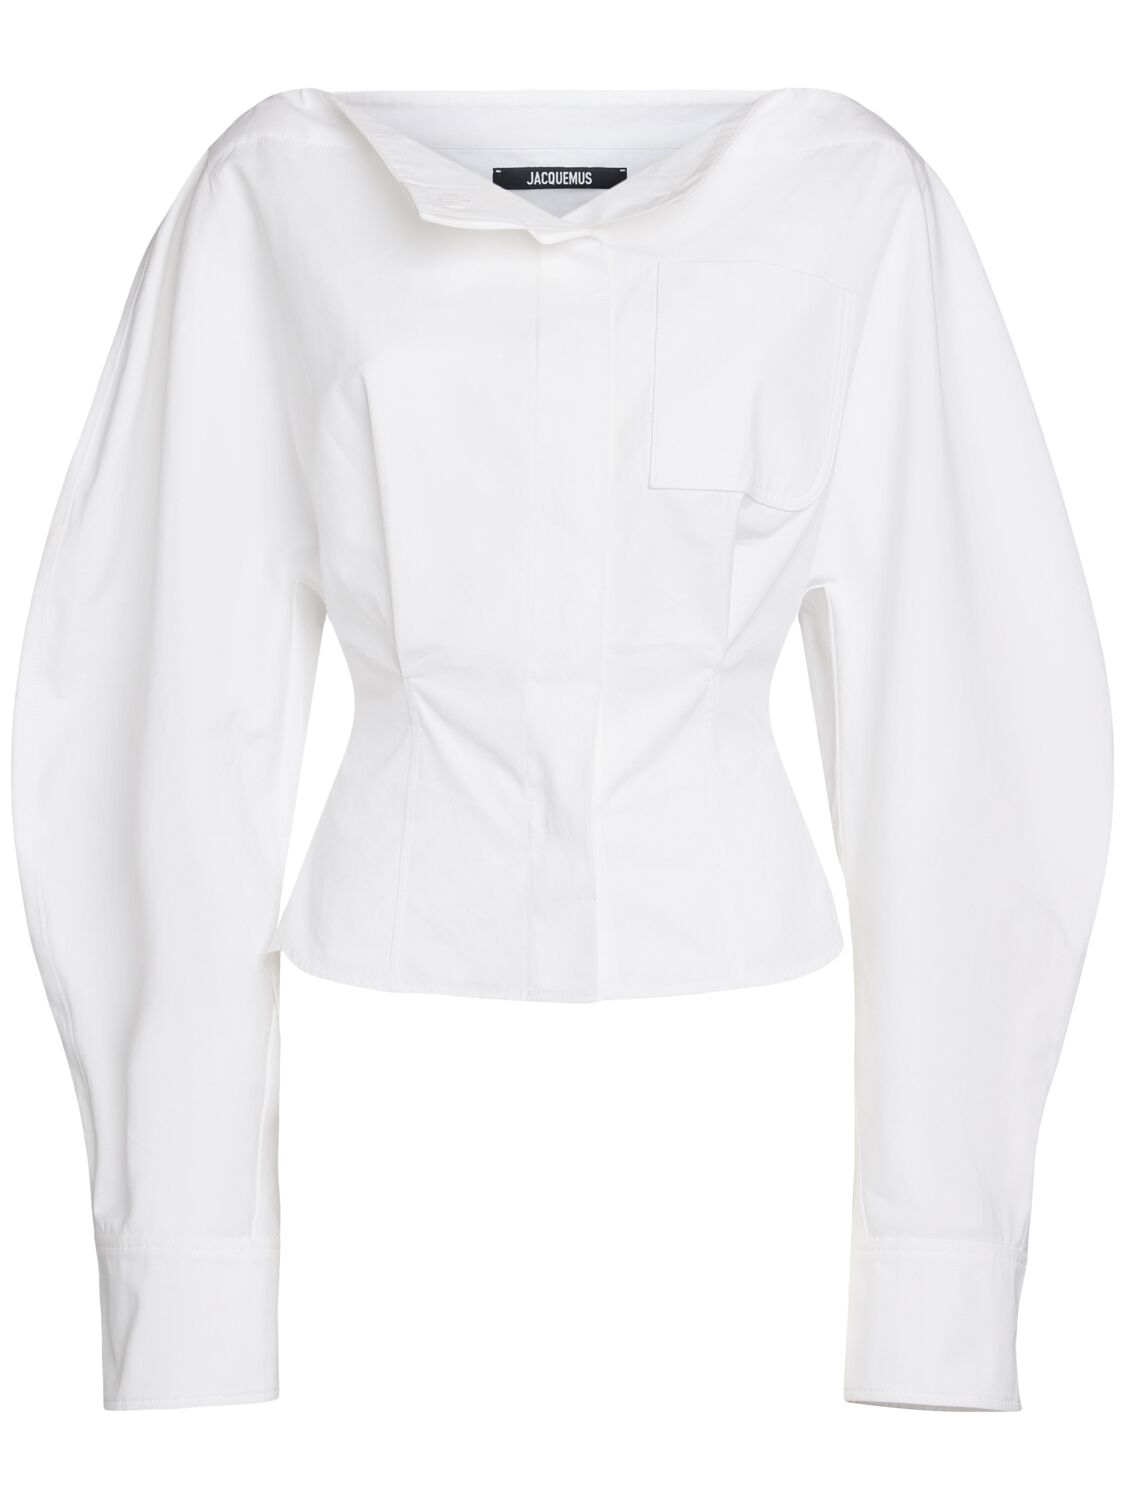 Jacquemus La Chemise Barco Poplin Shirt In White